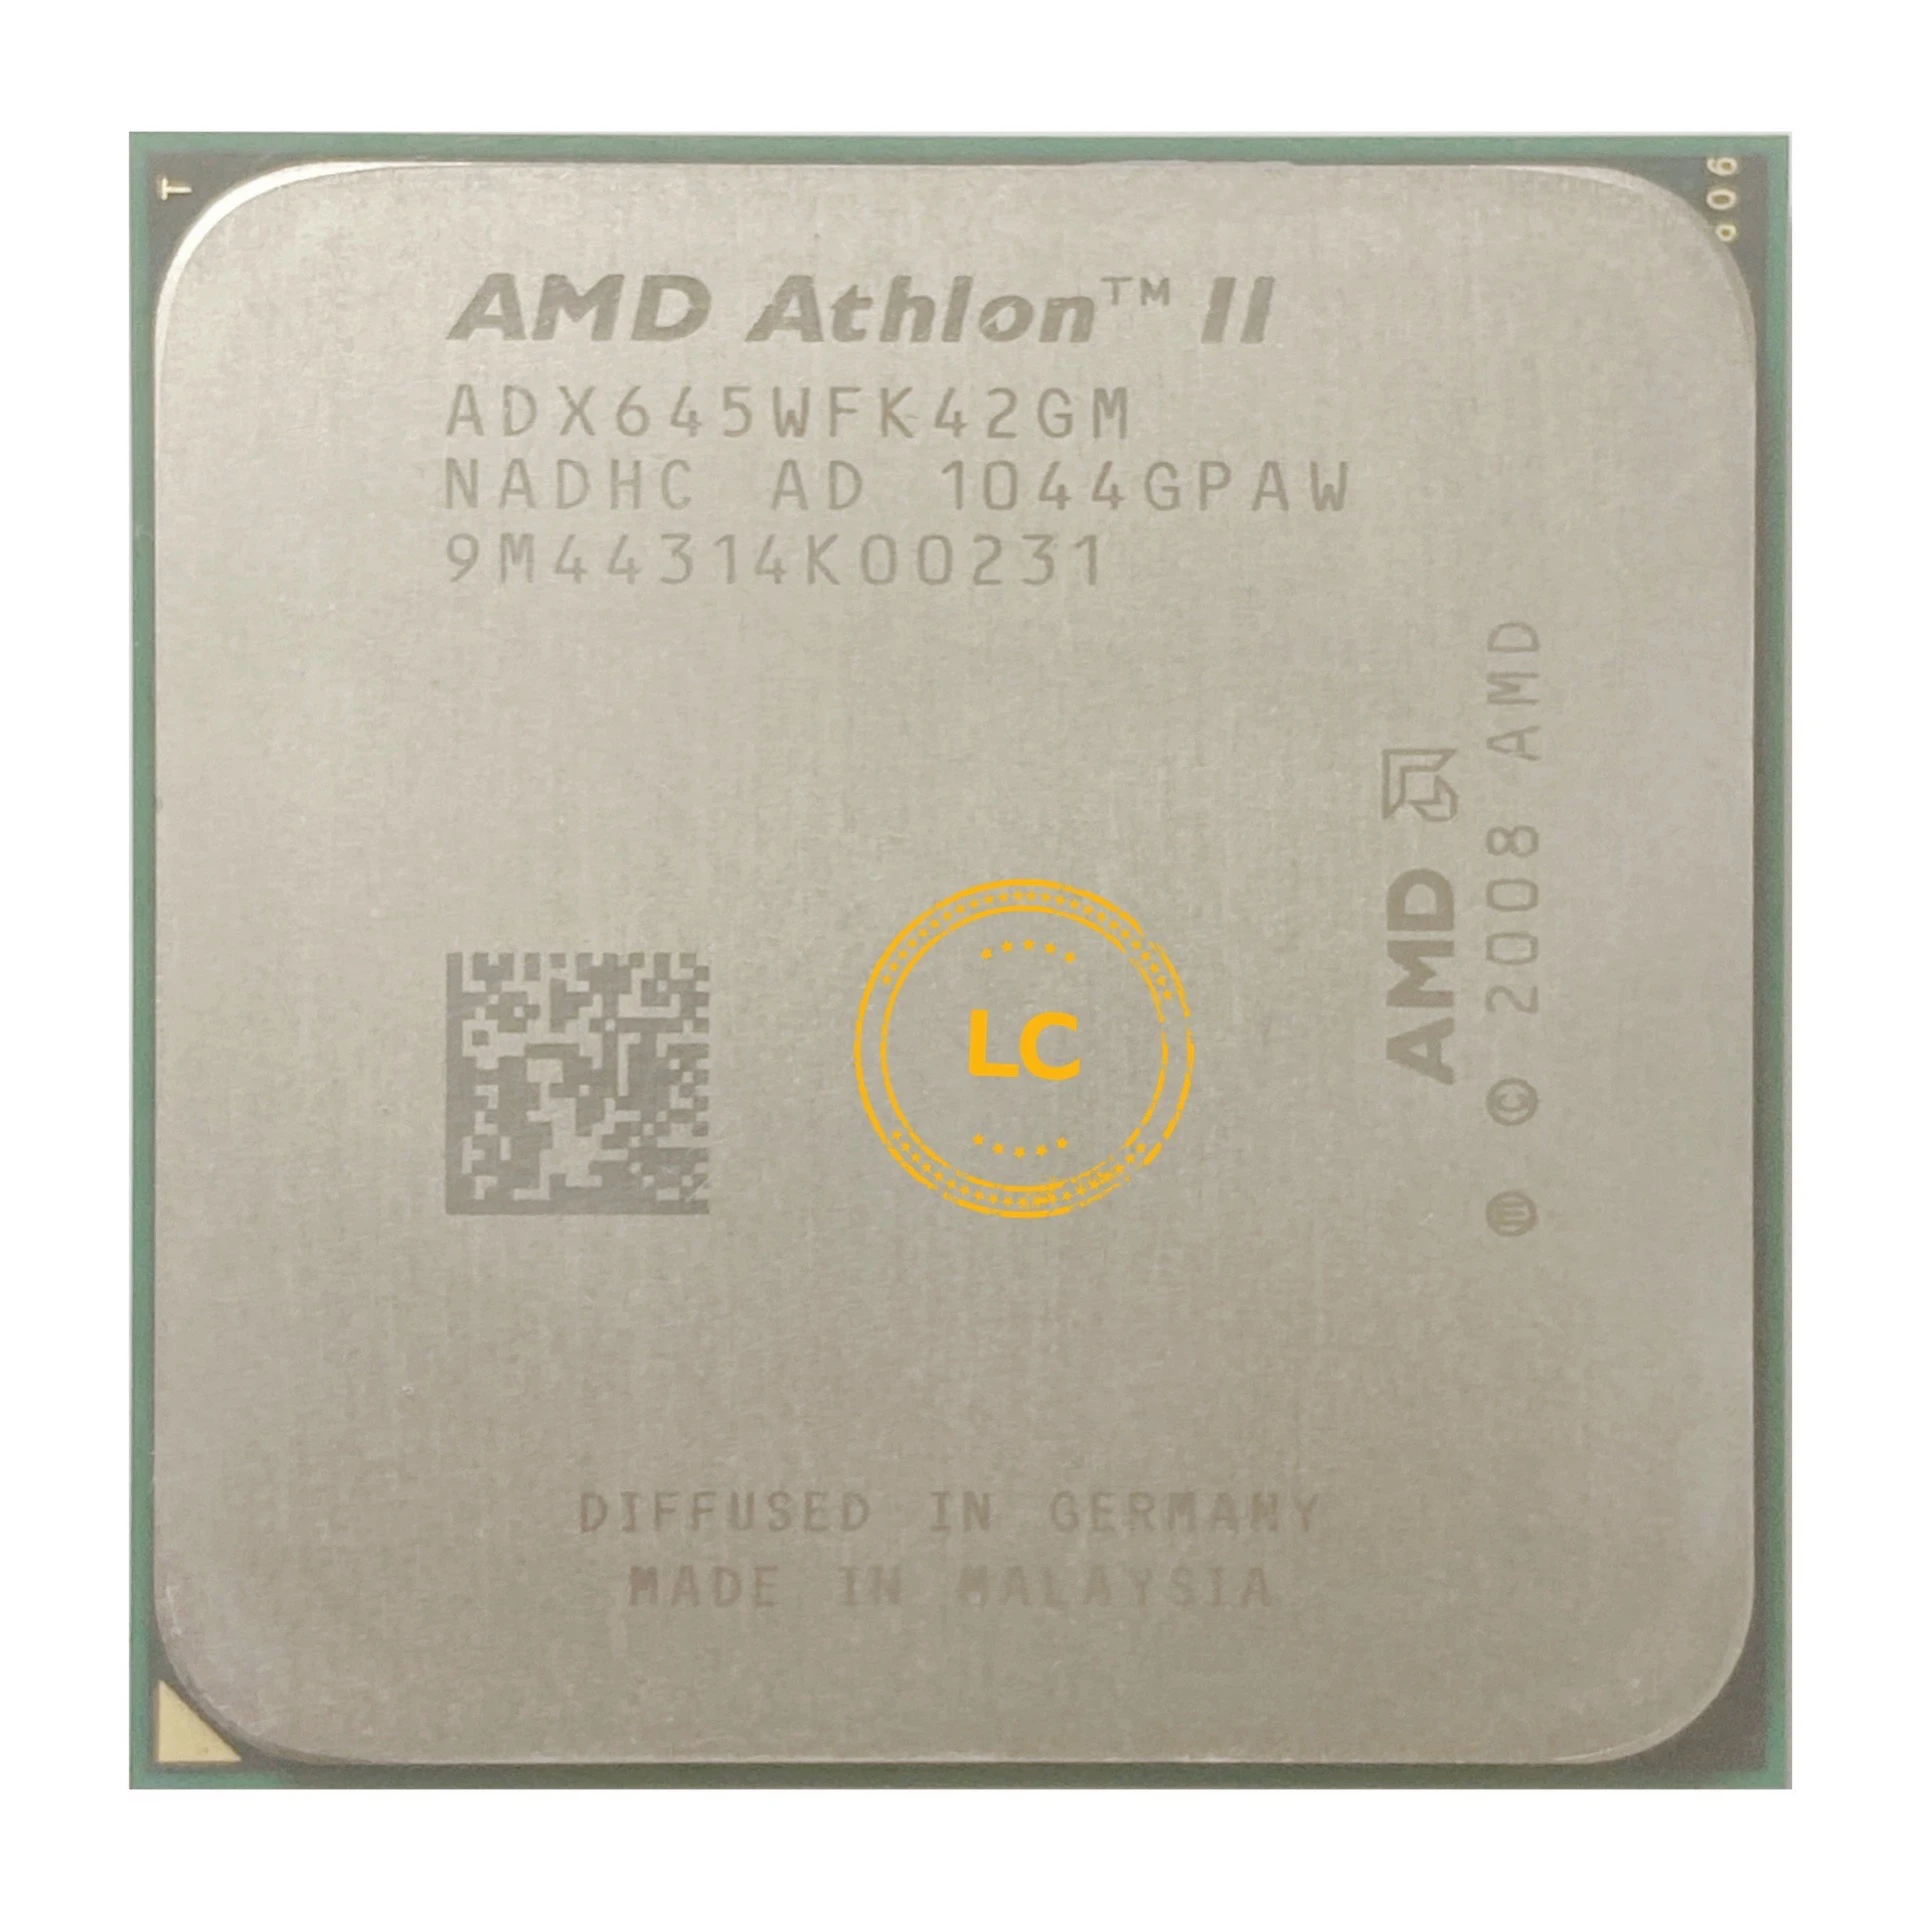 AMD Athlon II X4 645 3.1 GHz Quad-Core CPU Processor ADX645WFK42GM Socket AM3